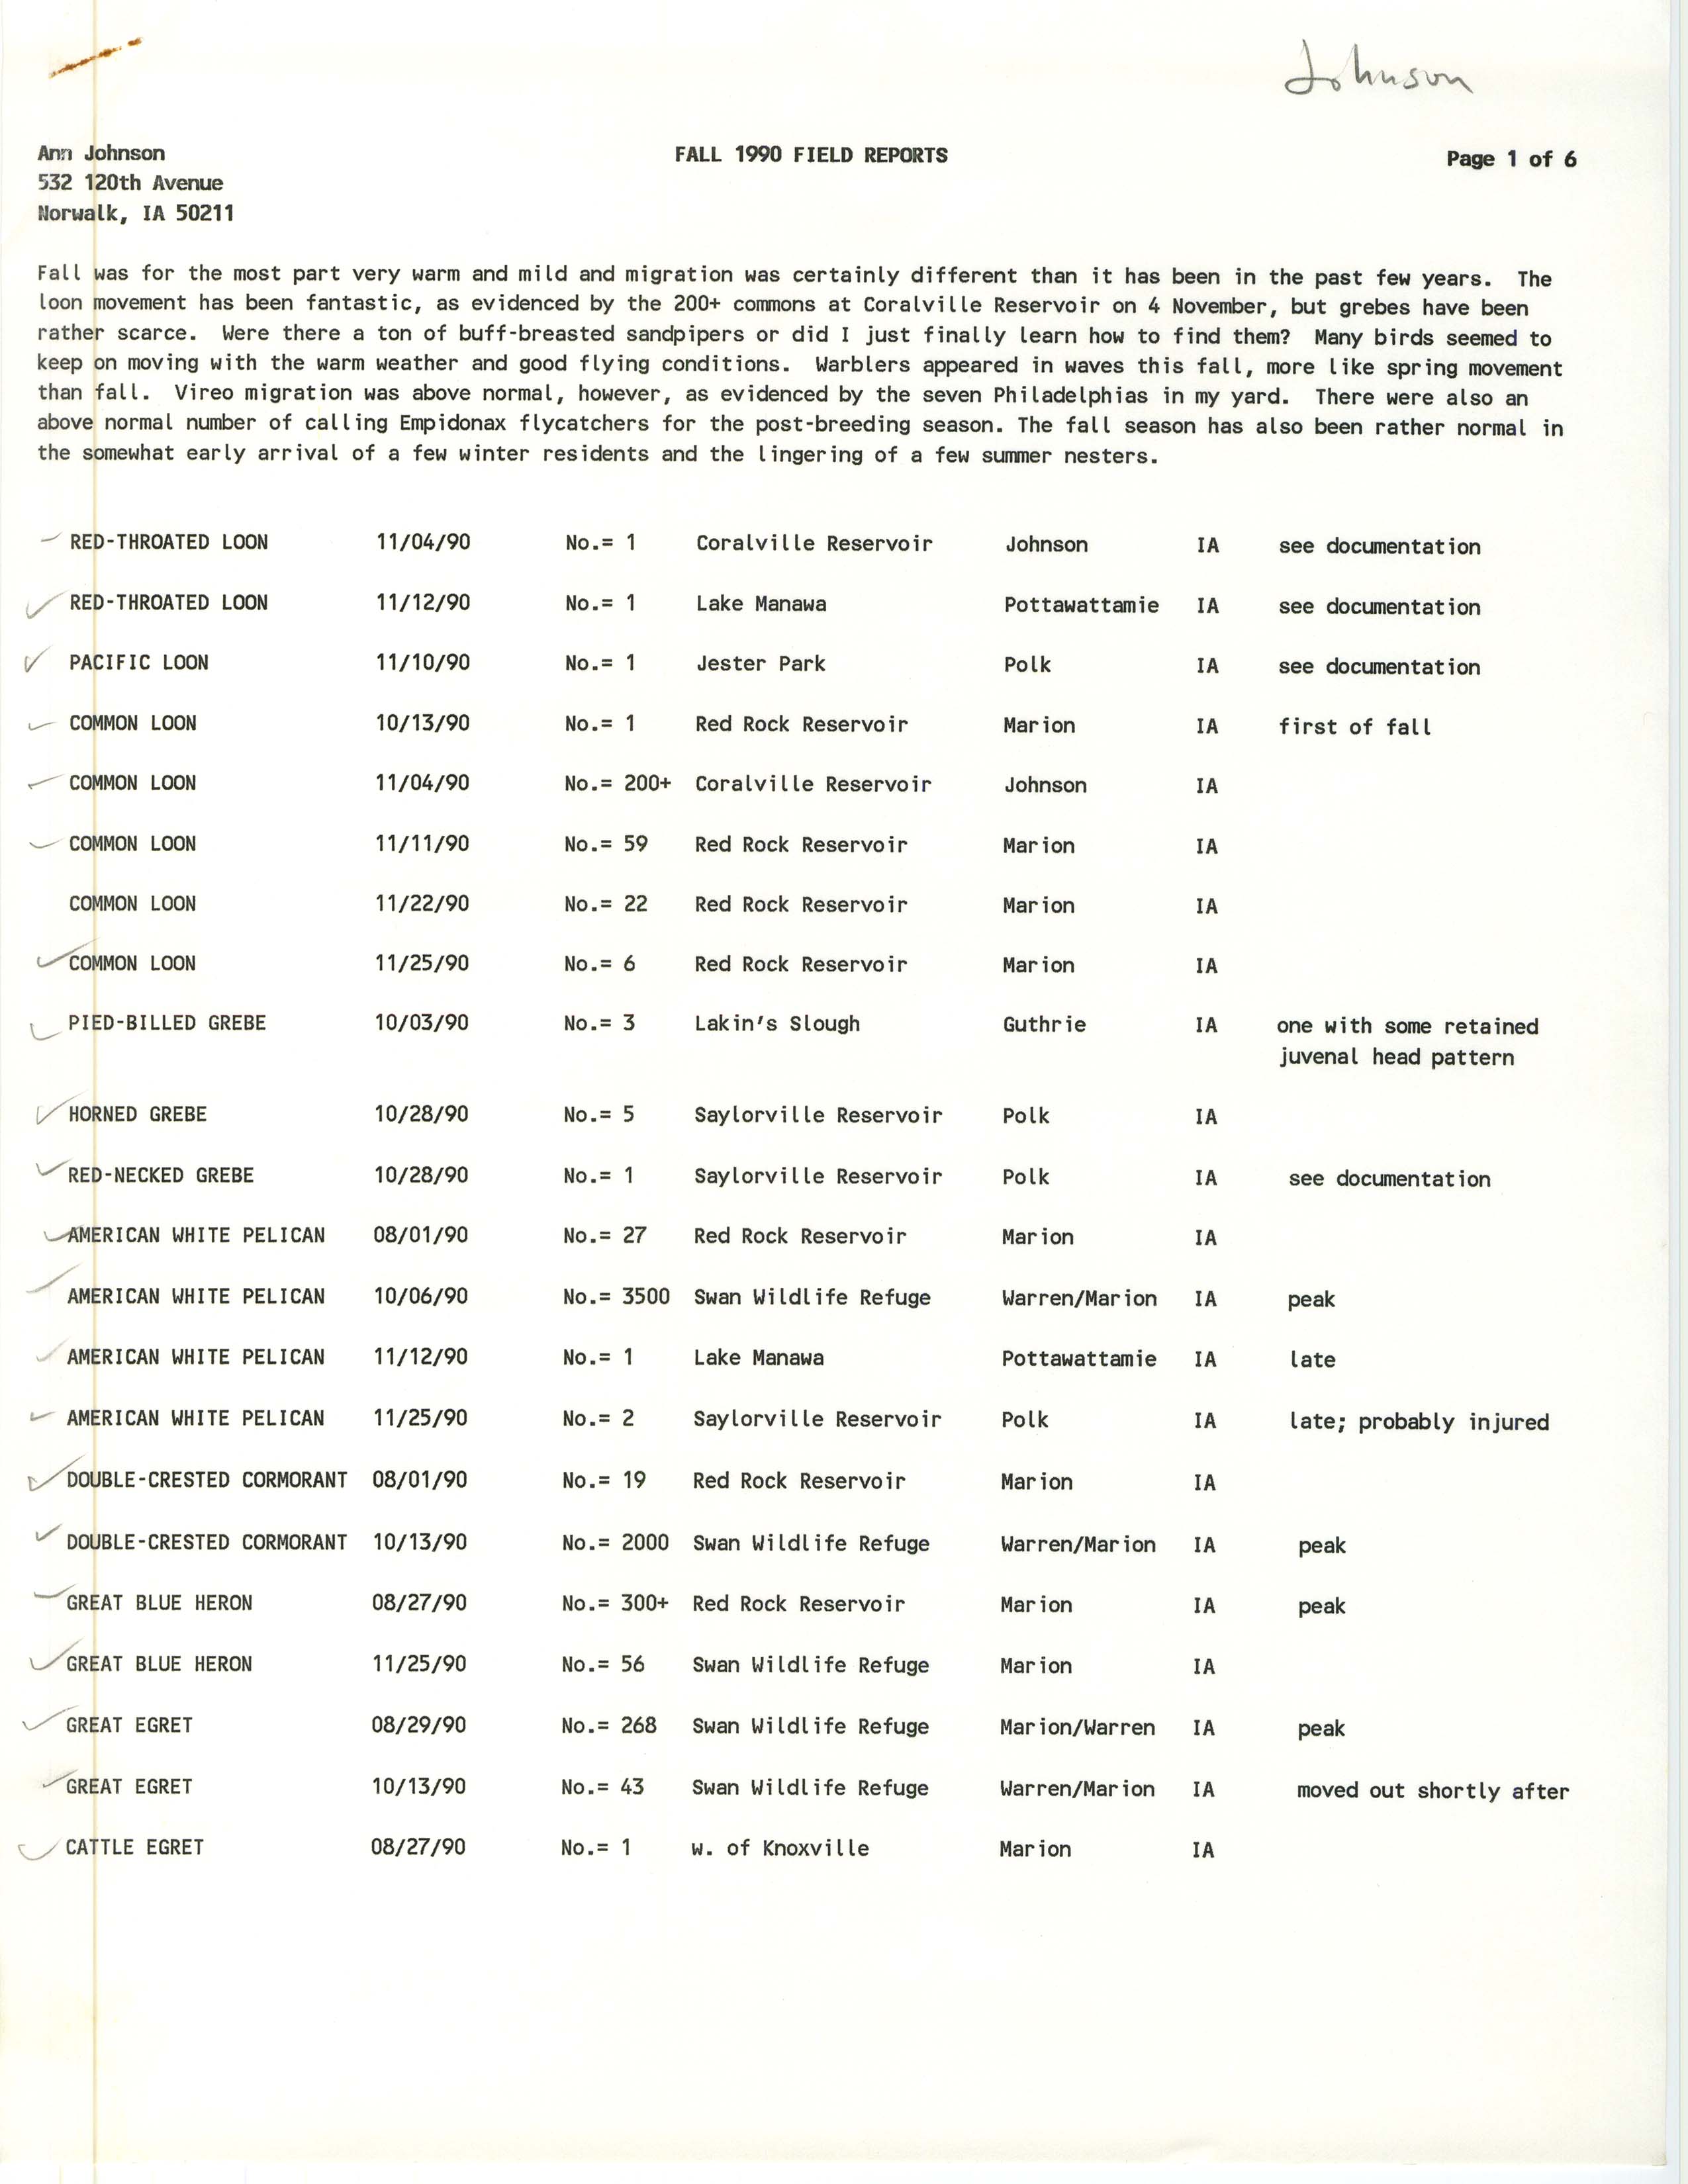 Field reports, Ann Johnson, fall 1990